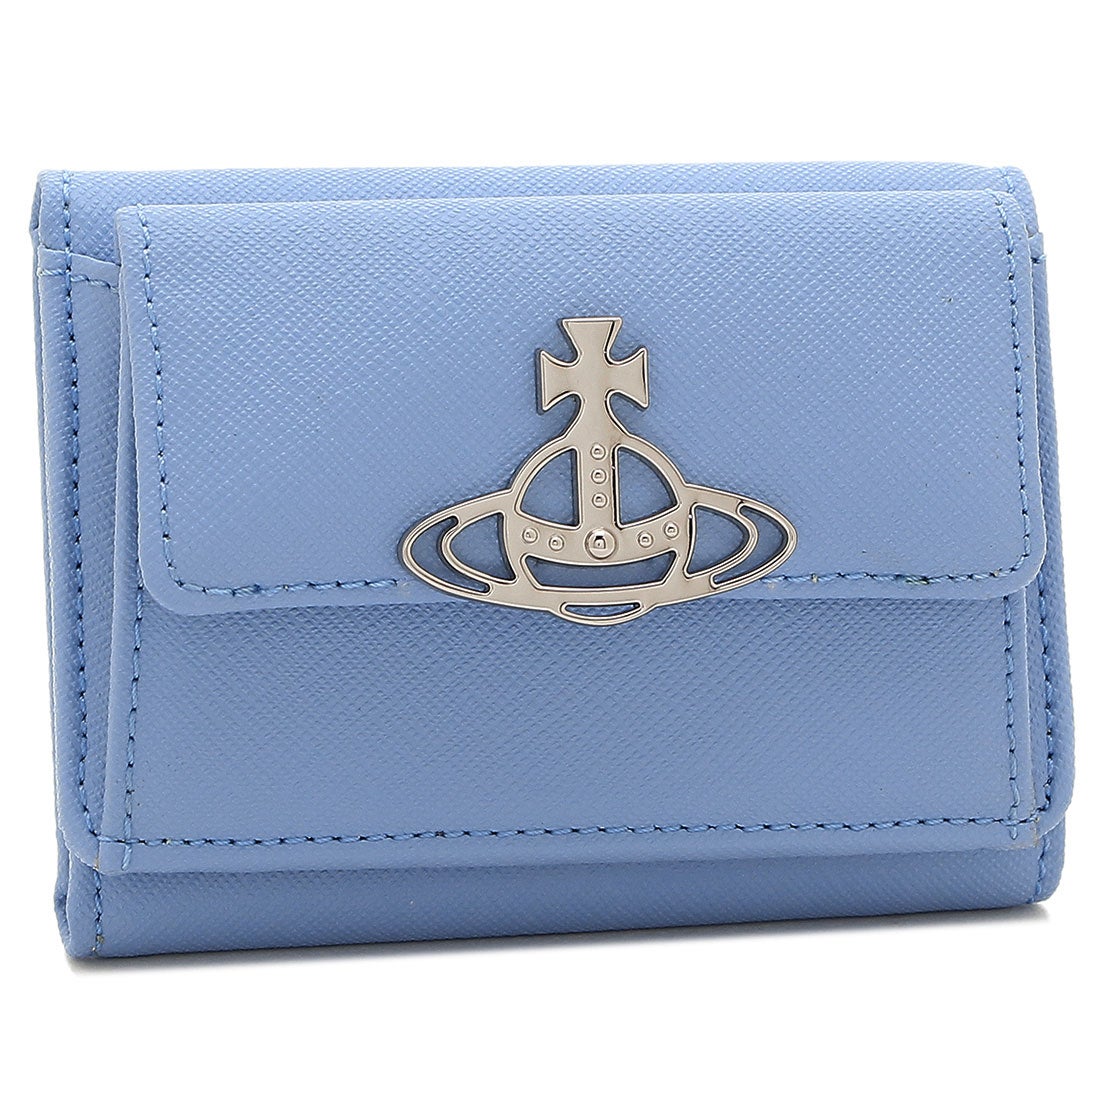 Vivienne Westwood 三つ折り財布 正規品 箱付き ブルー